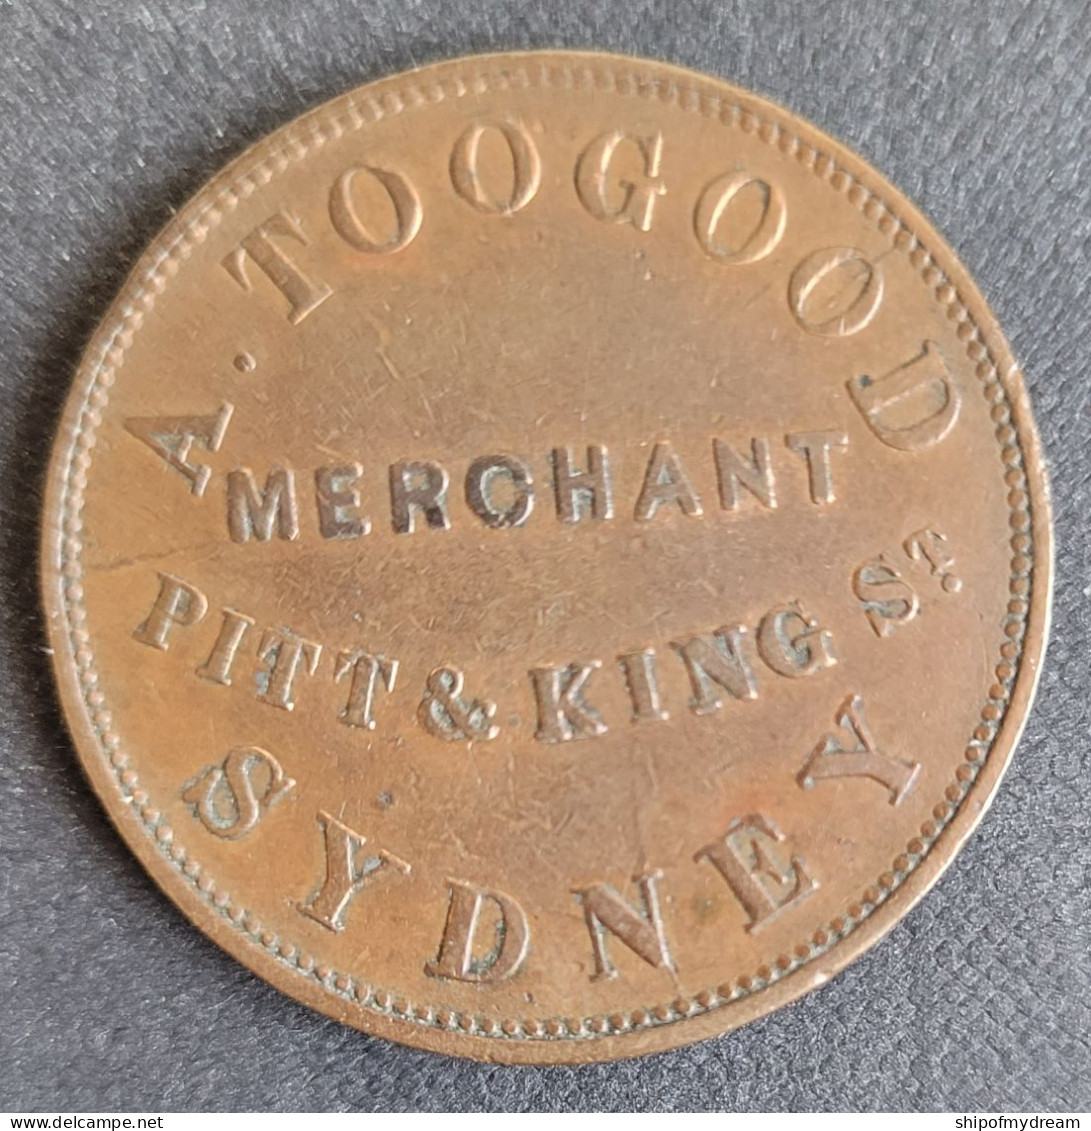 Australia Penny 1855 Tn256, A. Toogood Pitt & King St Merchant Sydney. High CV. - Betaalpenningen  (Krijgsgevangenen)